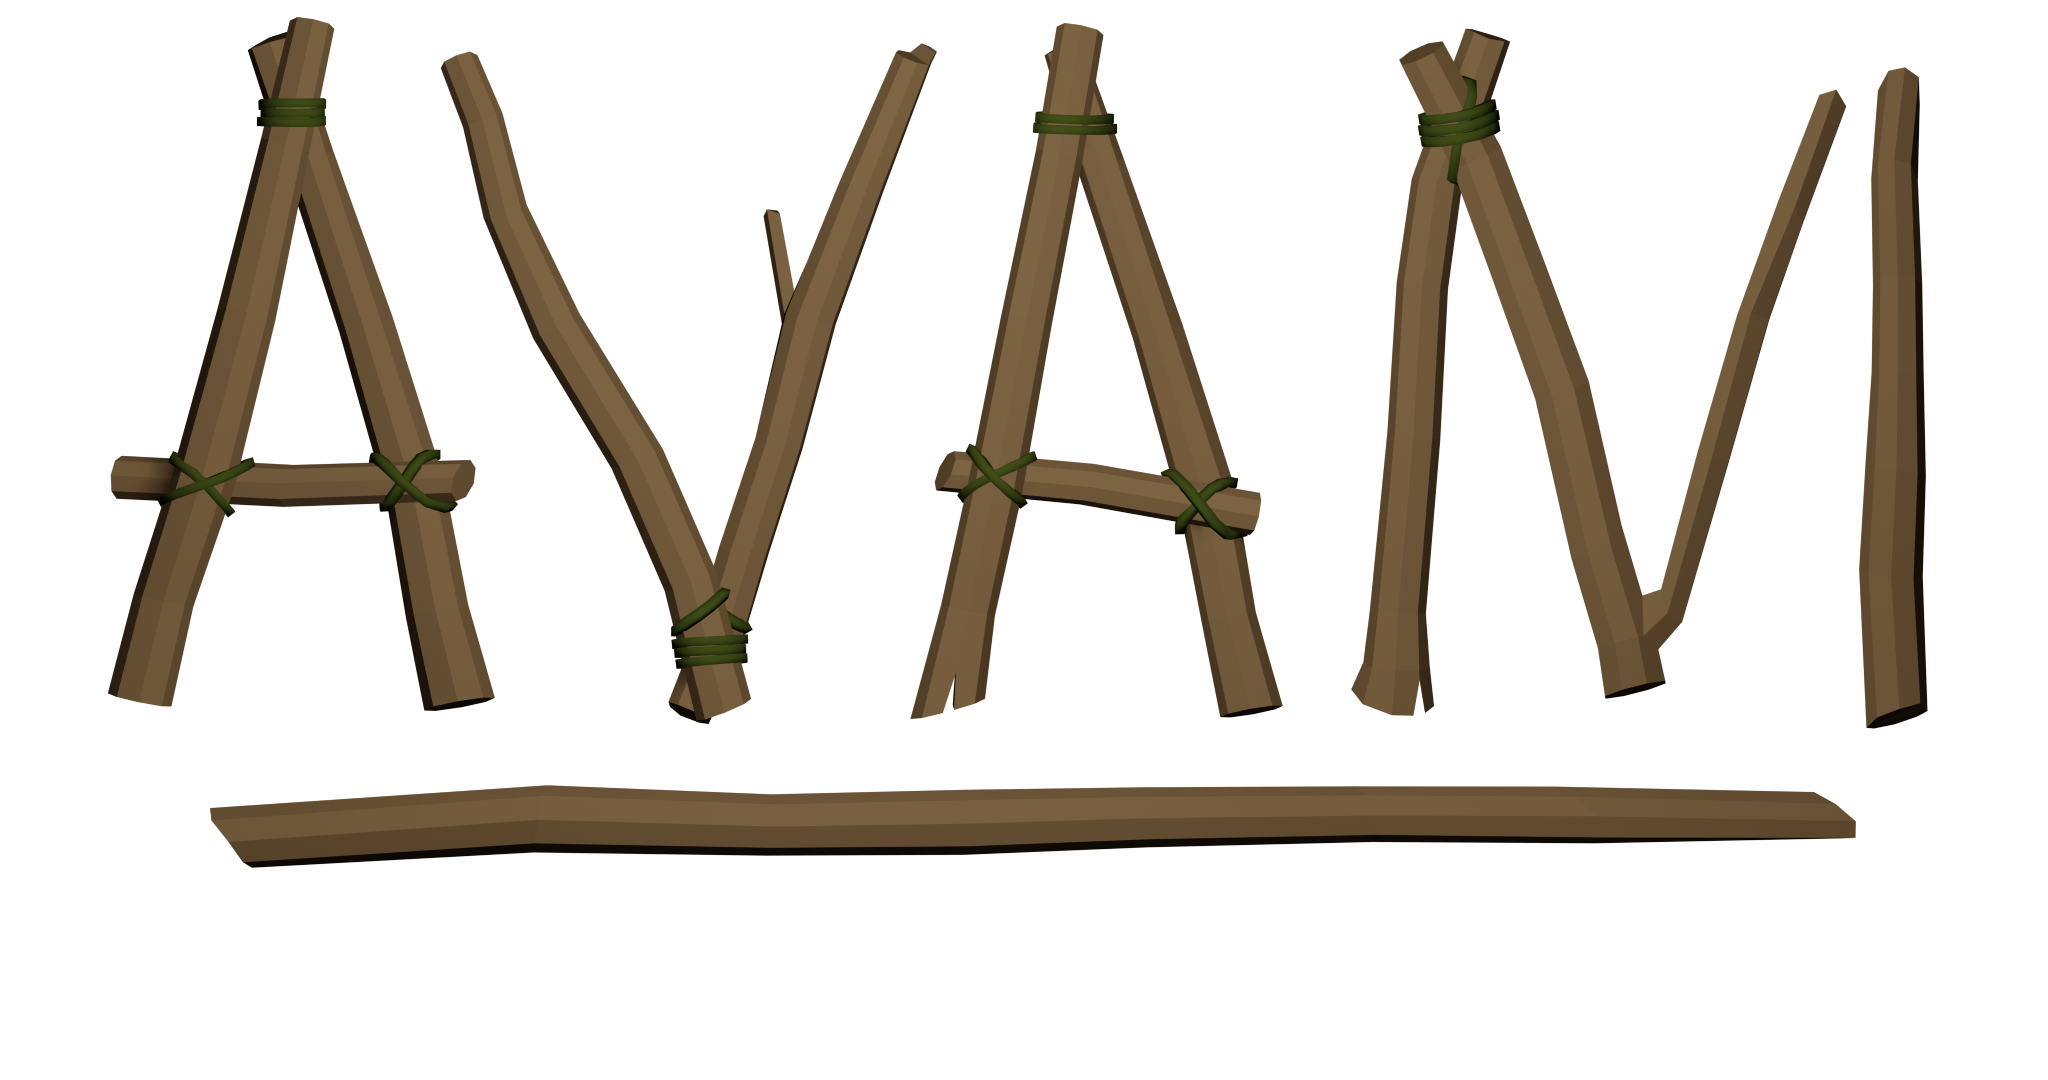 Avani: The Primal Land